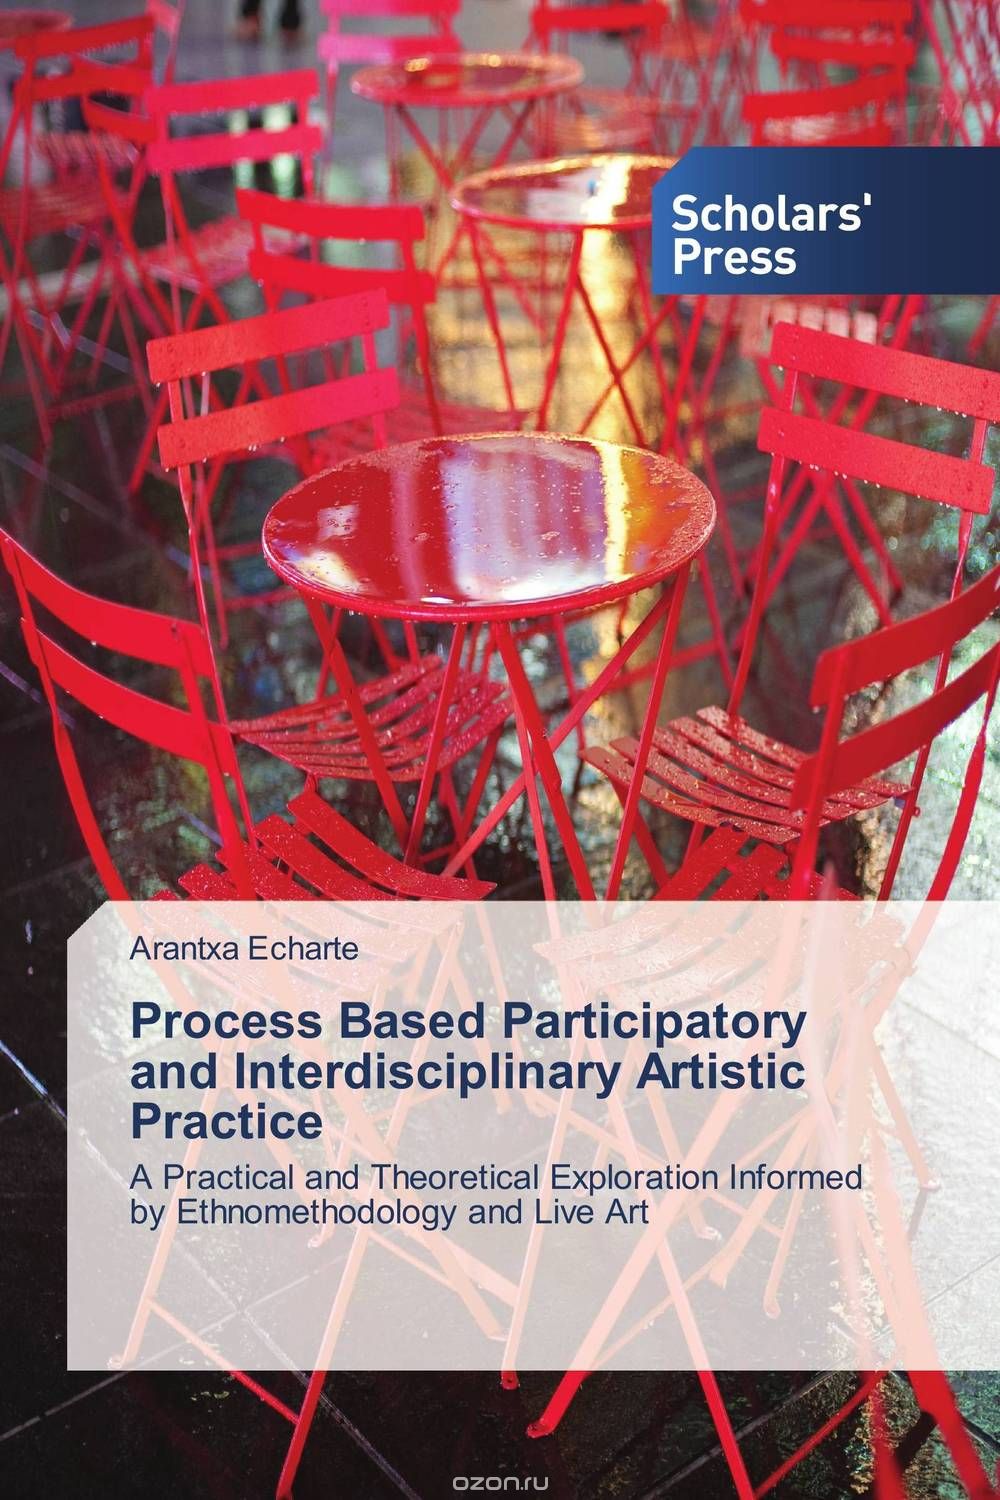 Скачать книгу "Process Based Participatory and Interdisciplinary Artistic Practice"